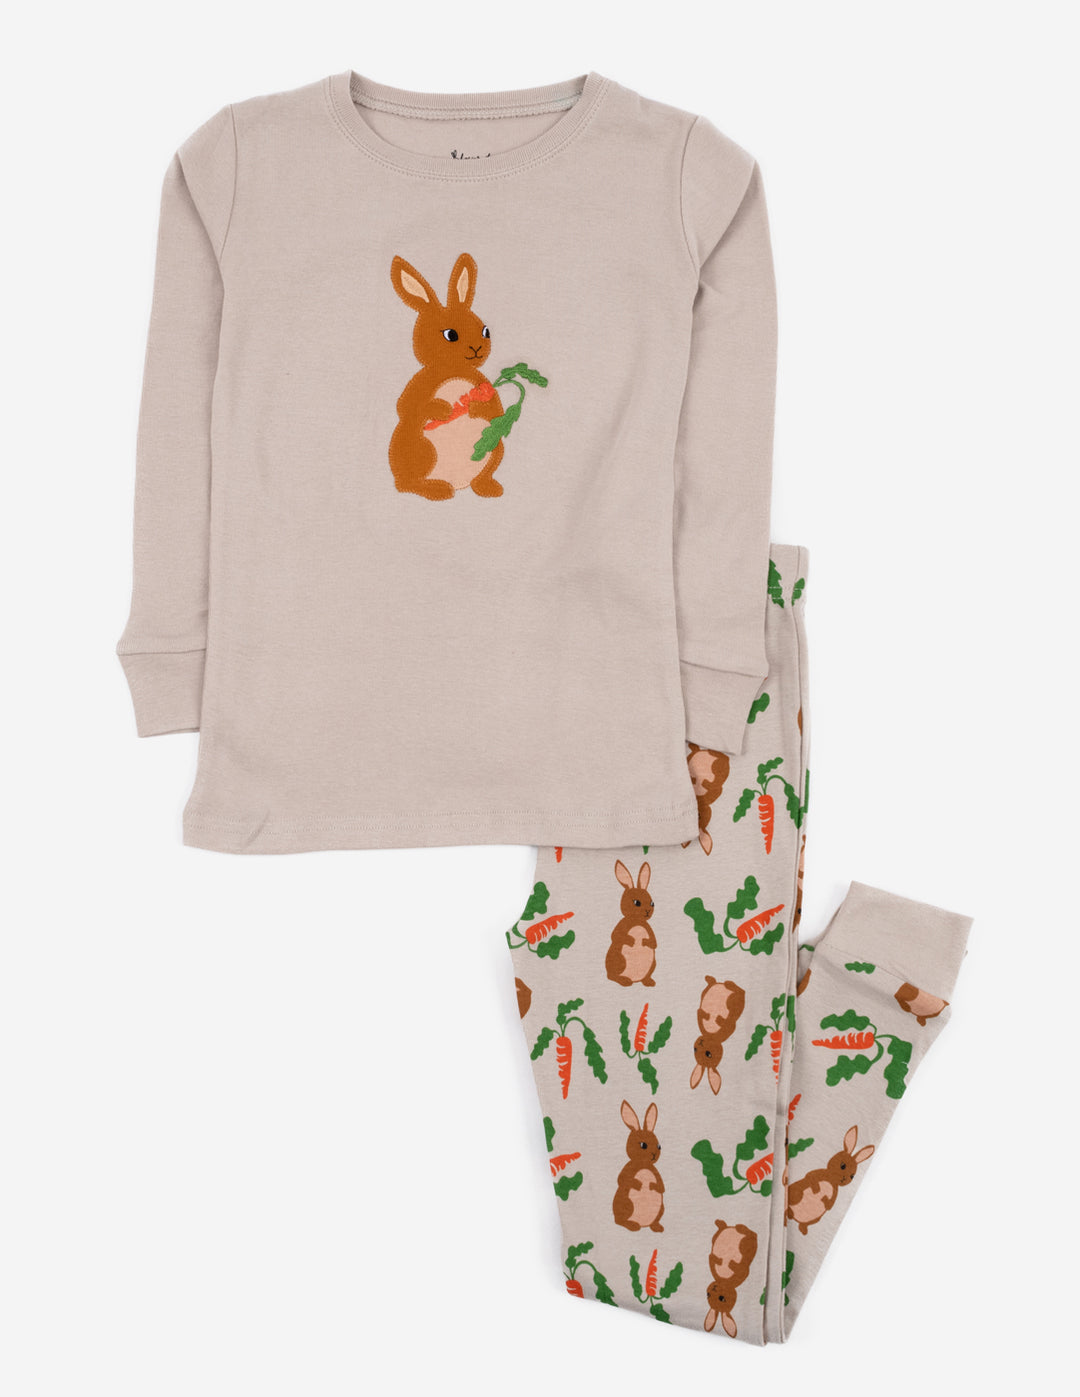 Shop Pj Bunny online